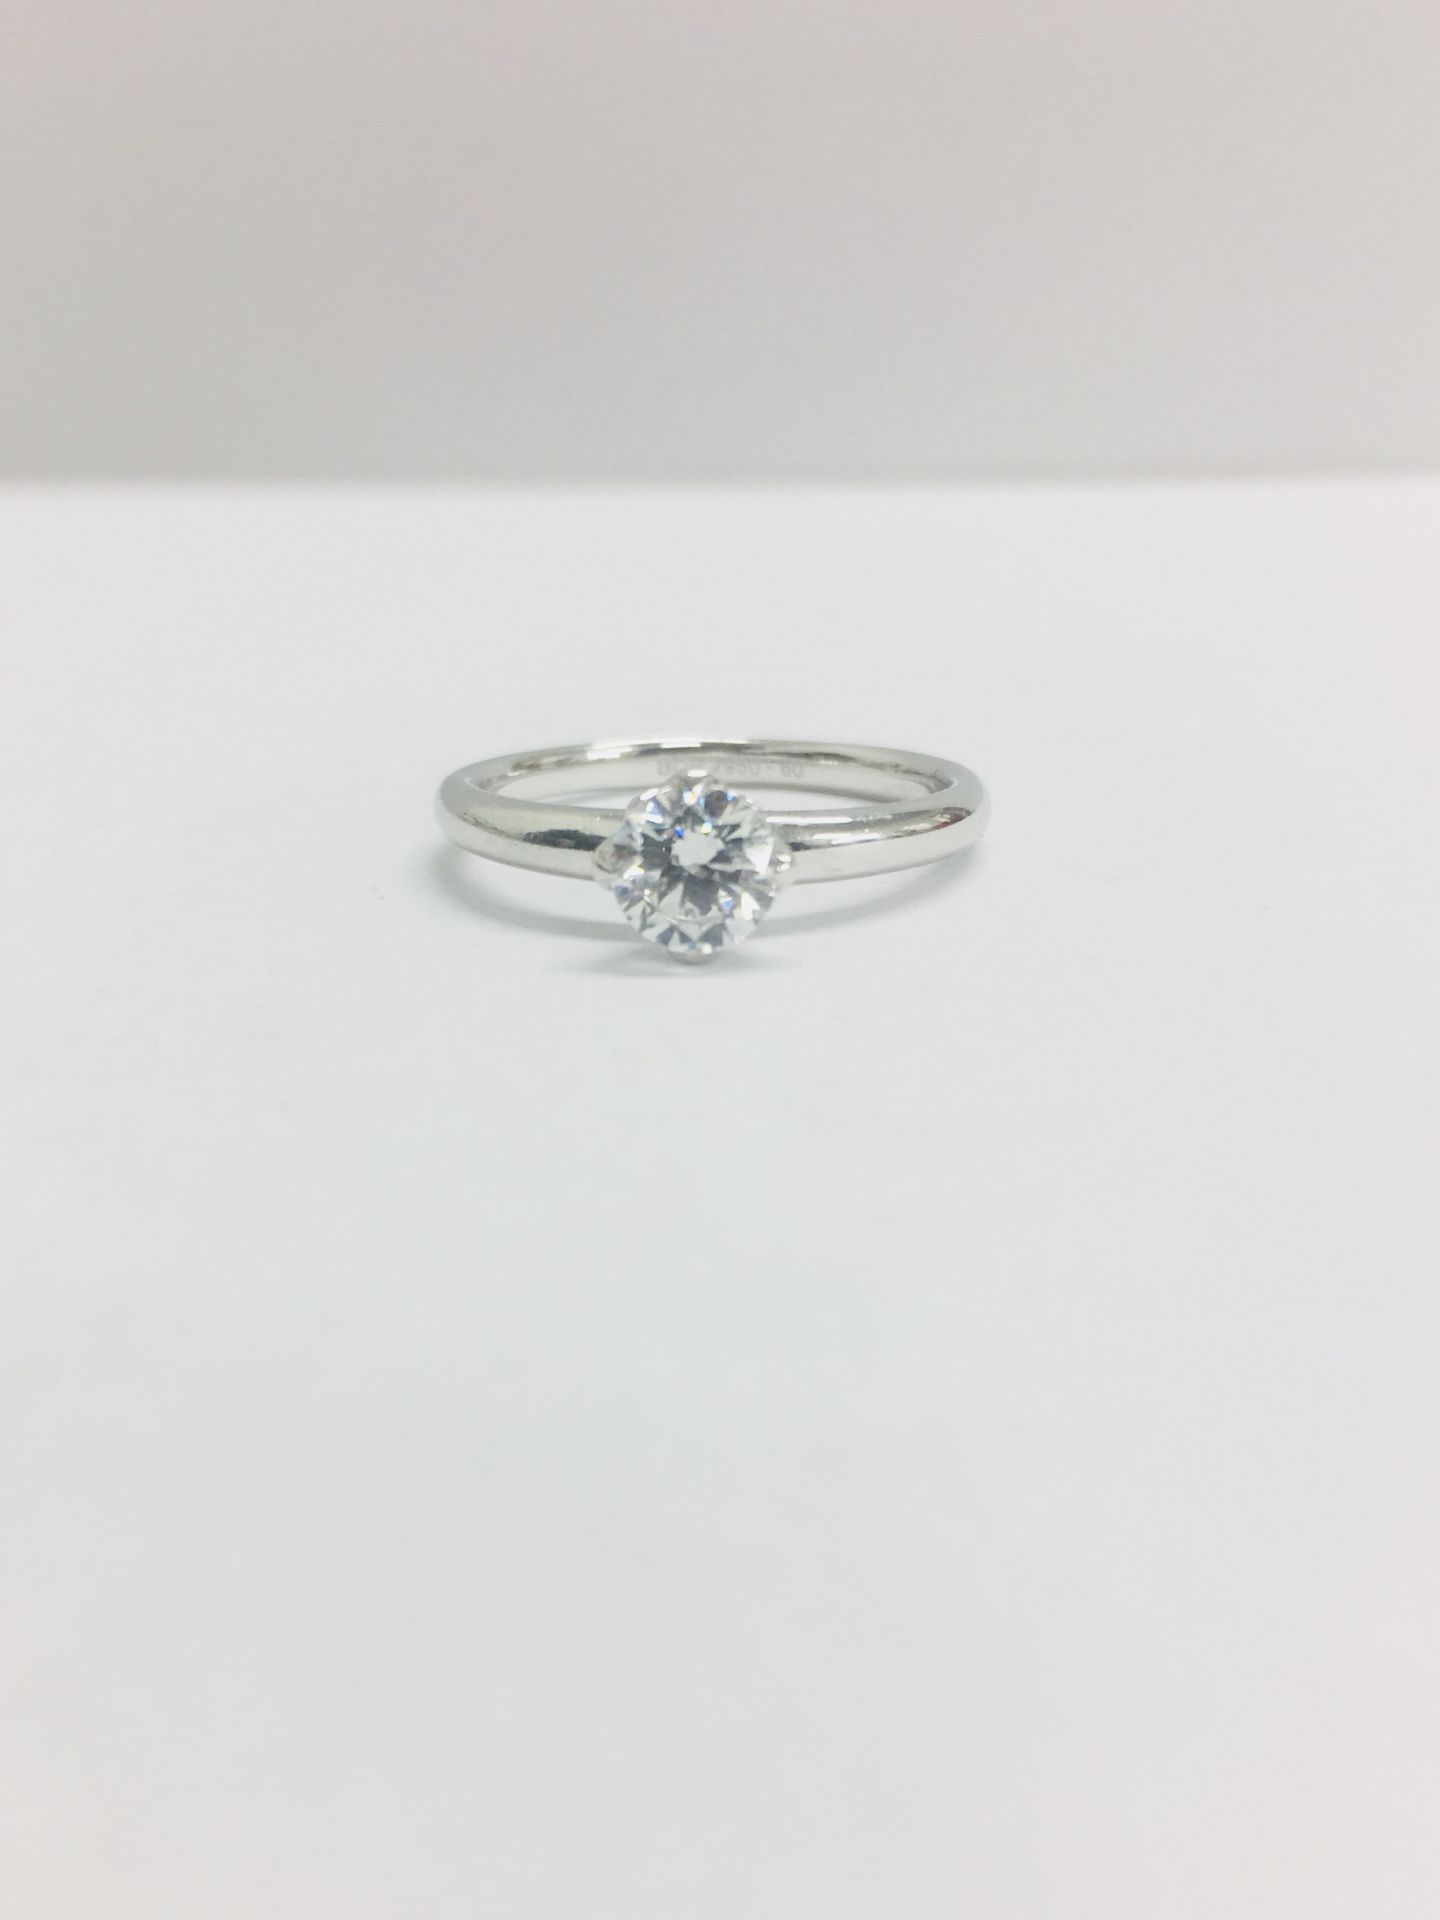 Platinum diamond solitaire ring,050ct h colour vs clarity natural diamond